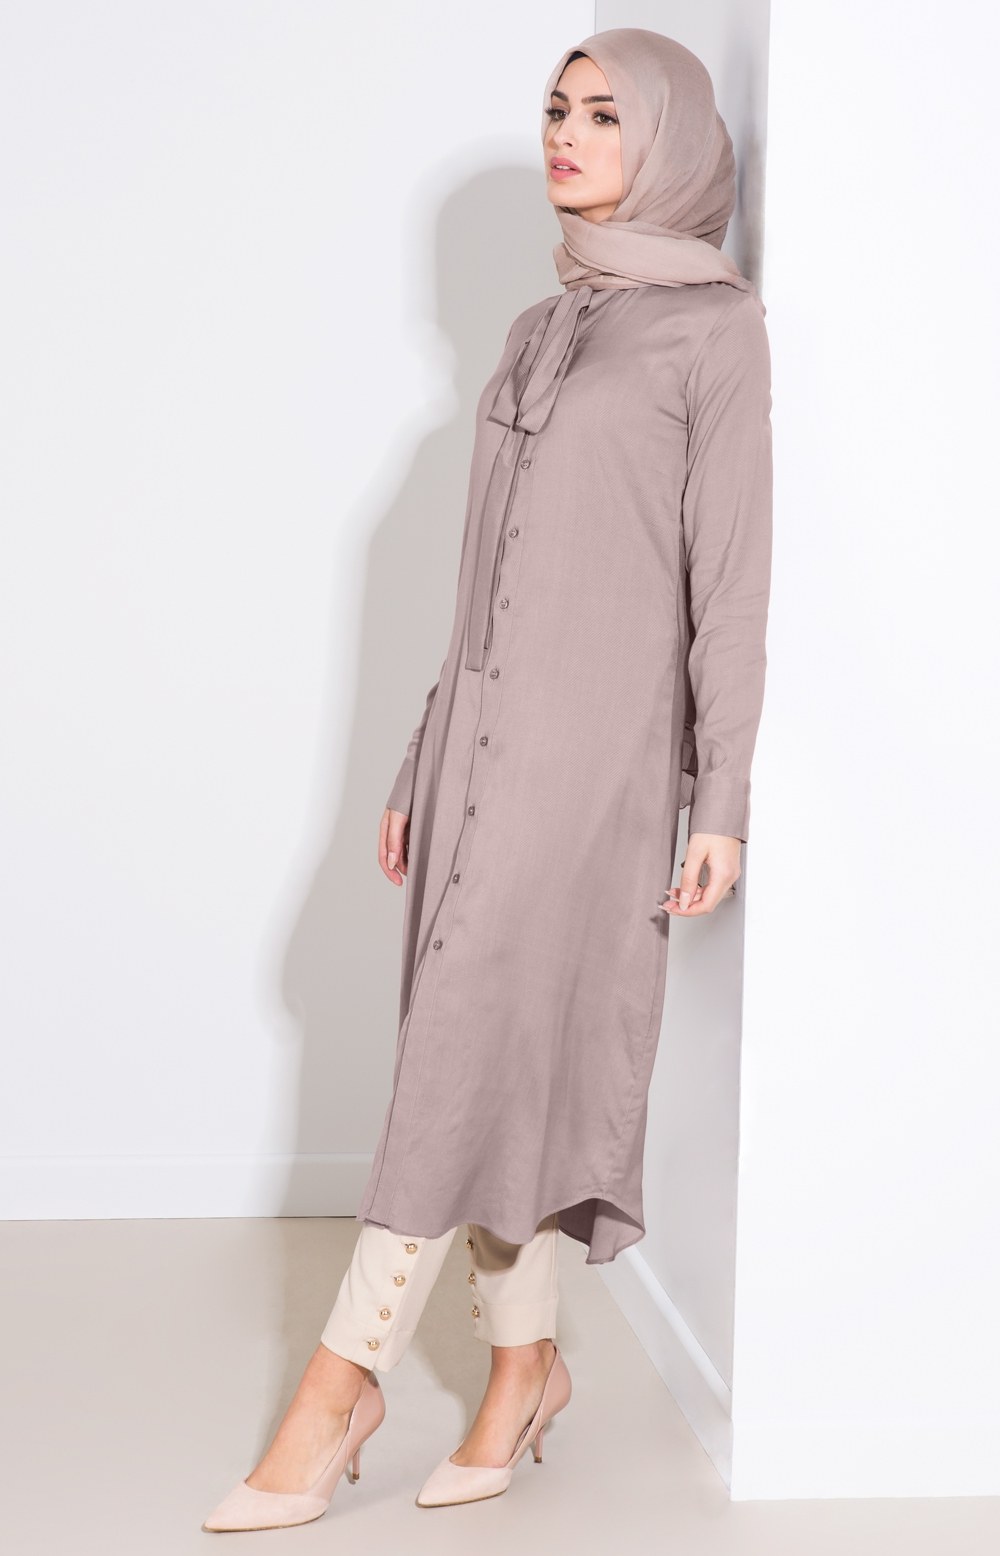 Bentuk Baju Lebaran Thn Ini Xtd6 25 Trend Model Baju Muslim Lebaran 2018 Simple &amp; Modis